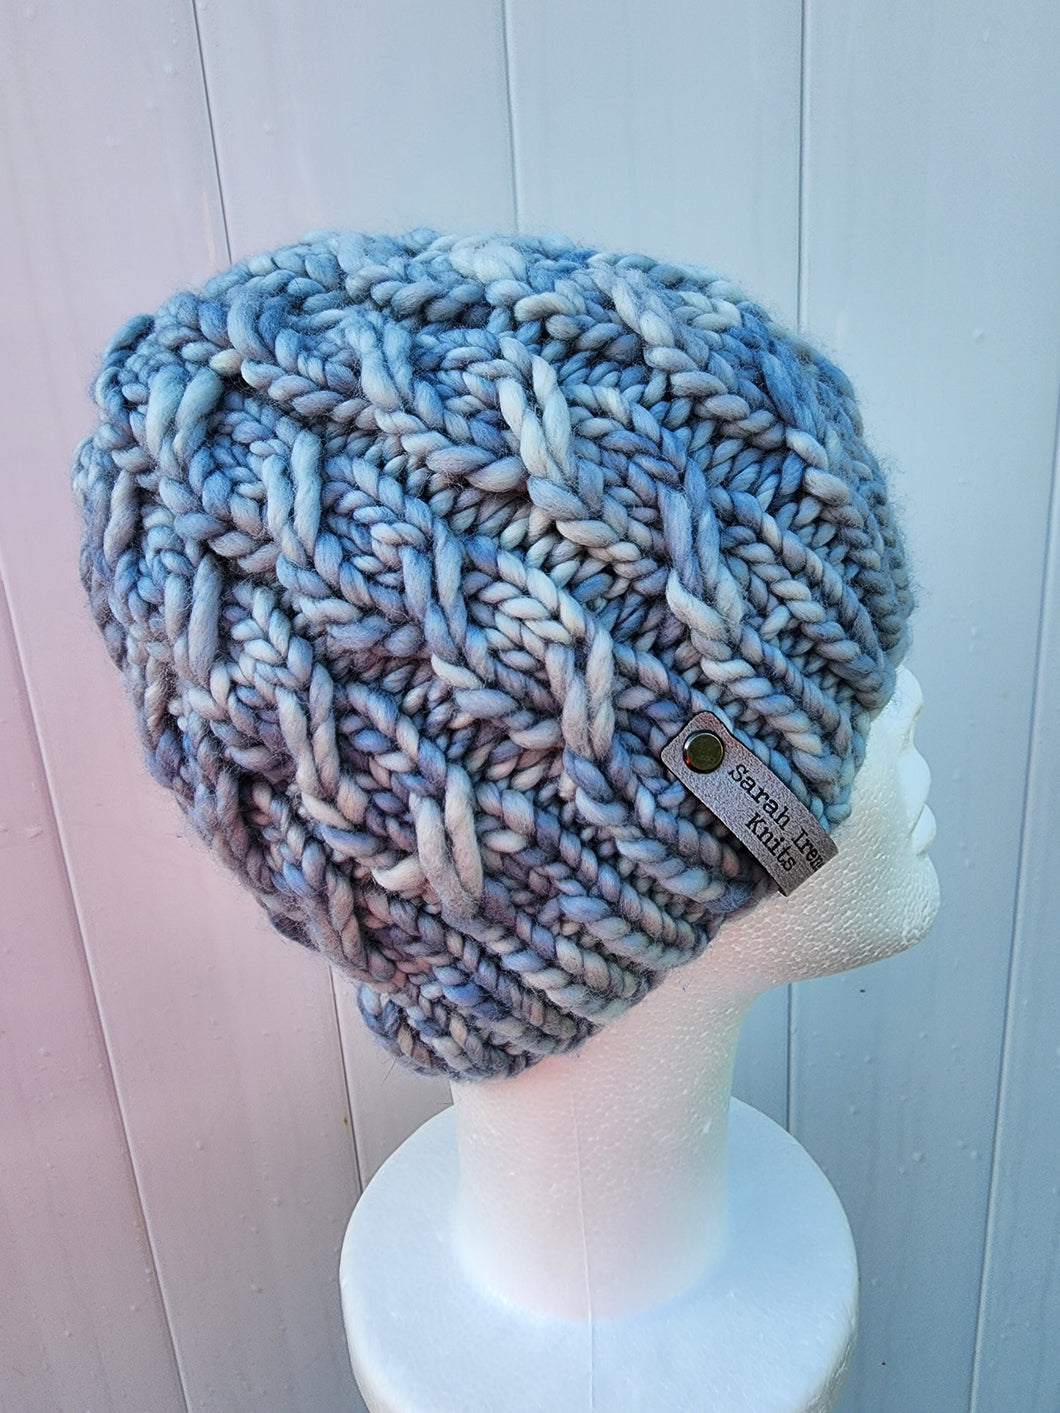 Braided effect beanie in light blue colored yarn. No pom.